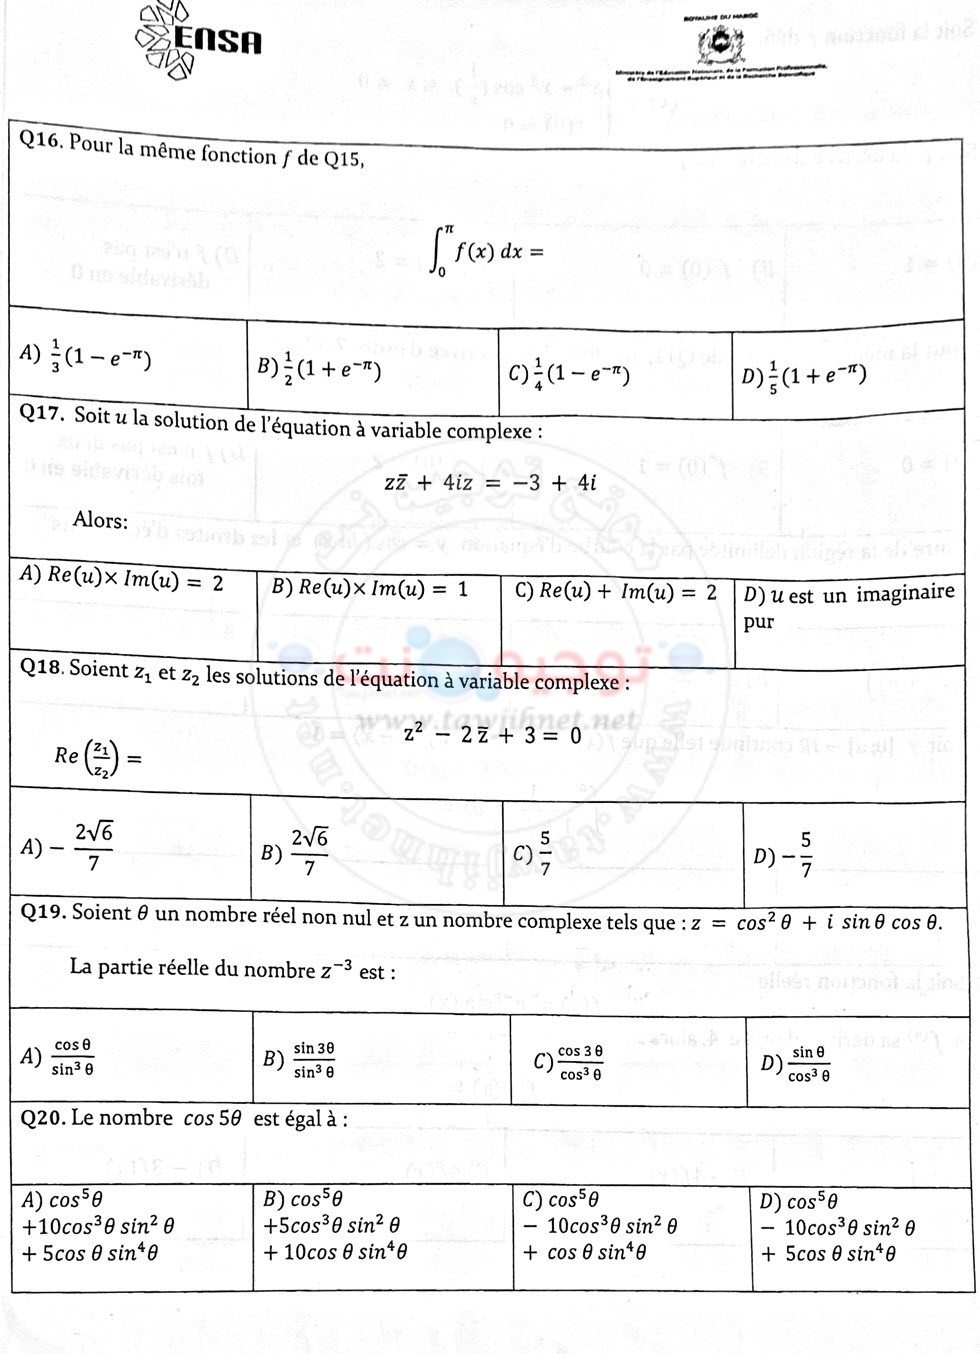 ensa-maroc-concours-maths-2021_Page_4.jpg